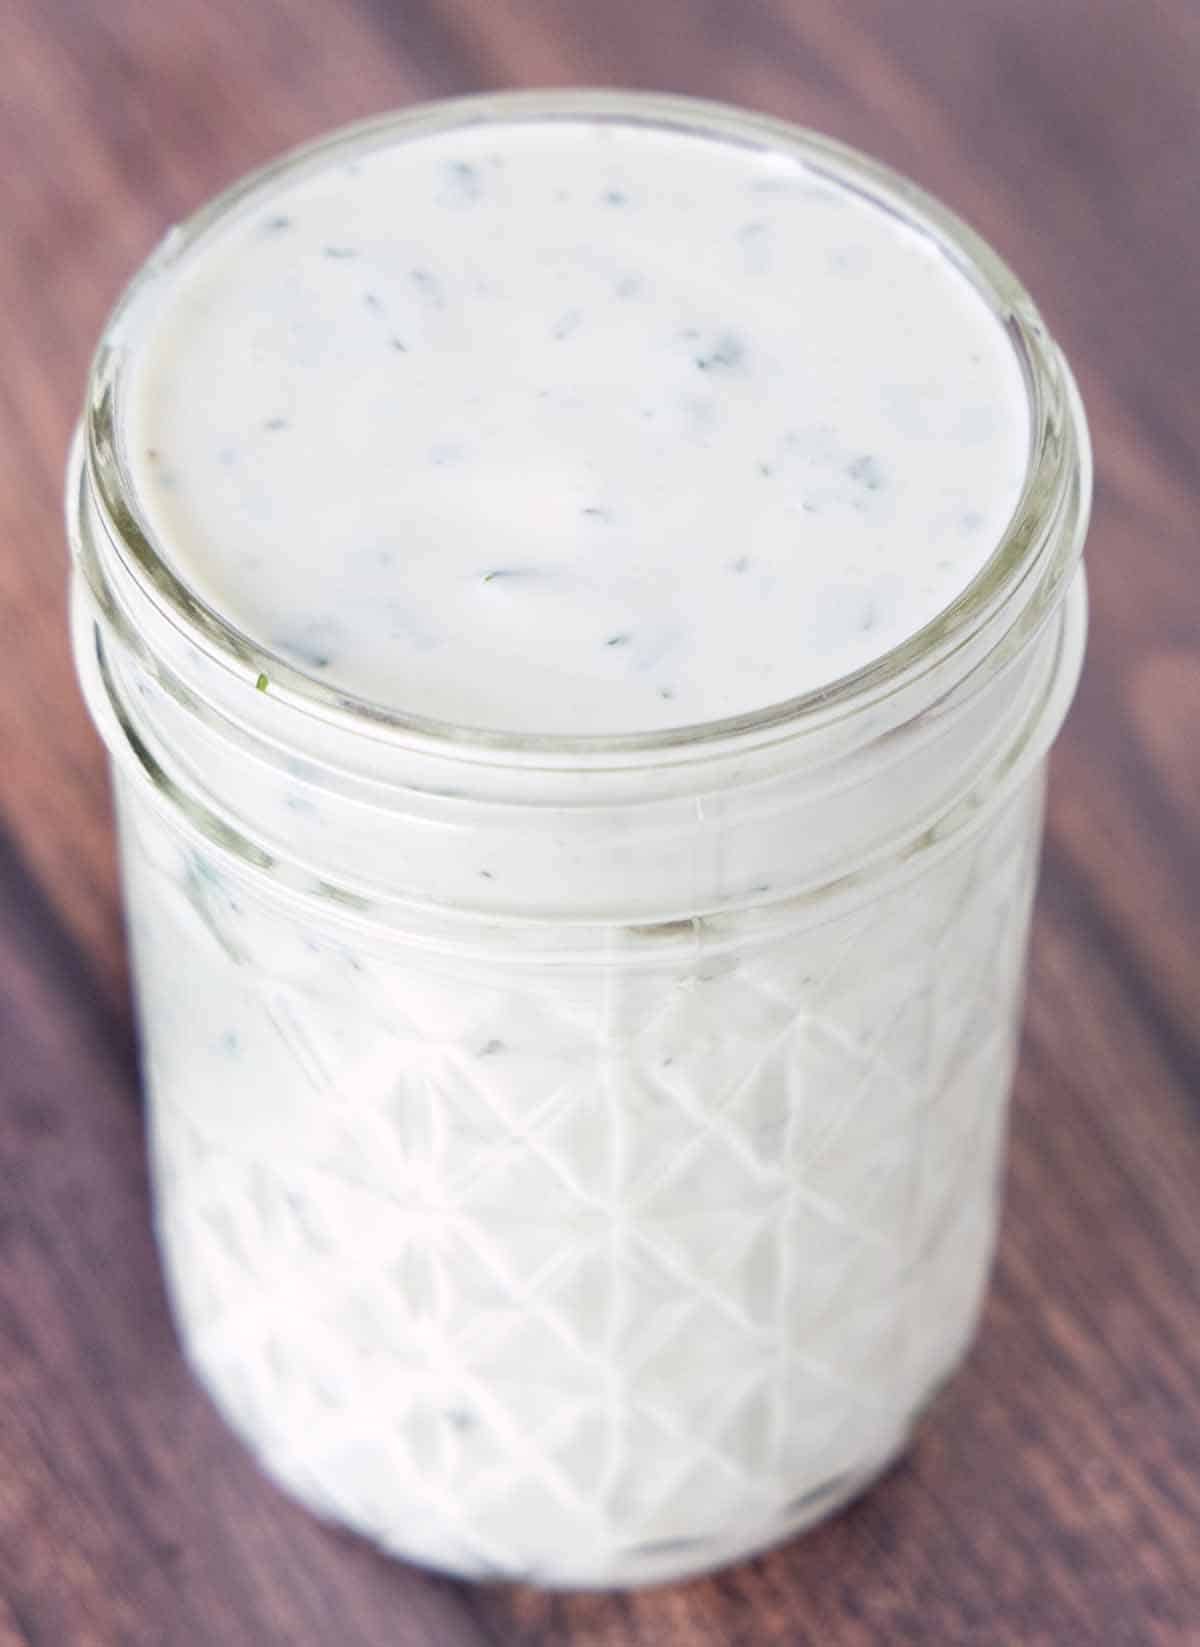 buttermilk ranch dressing in a glass jar.